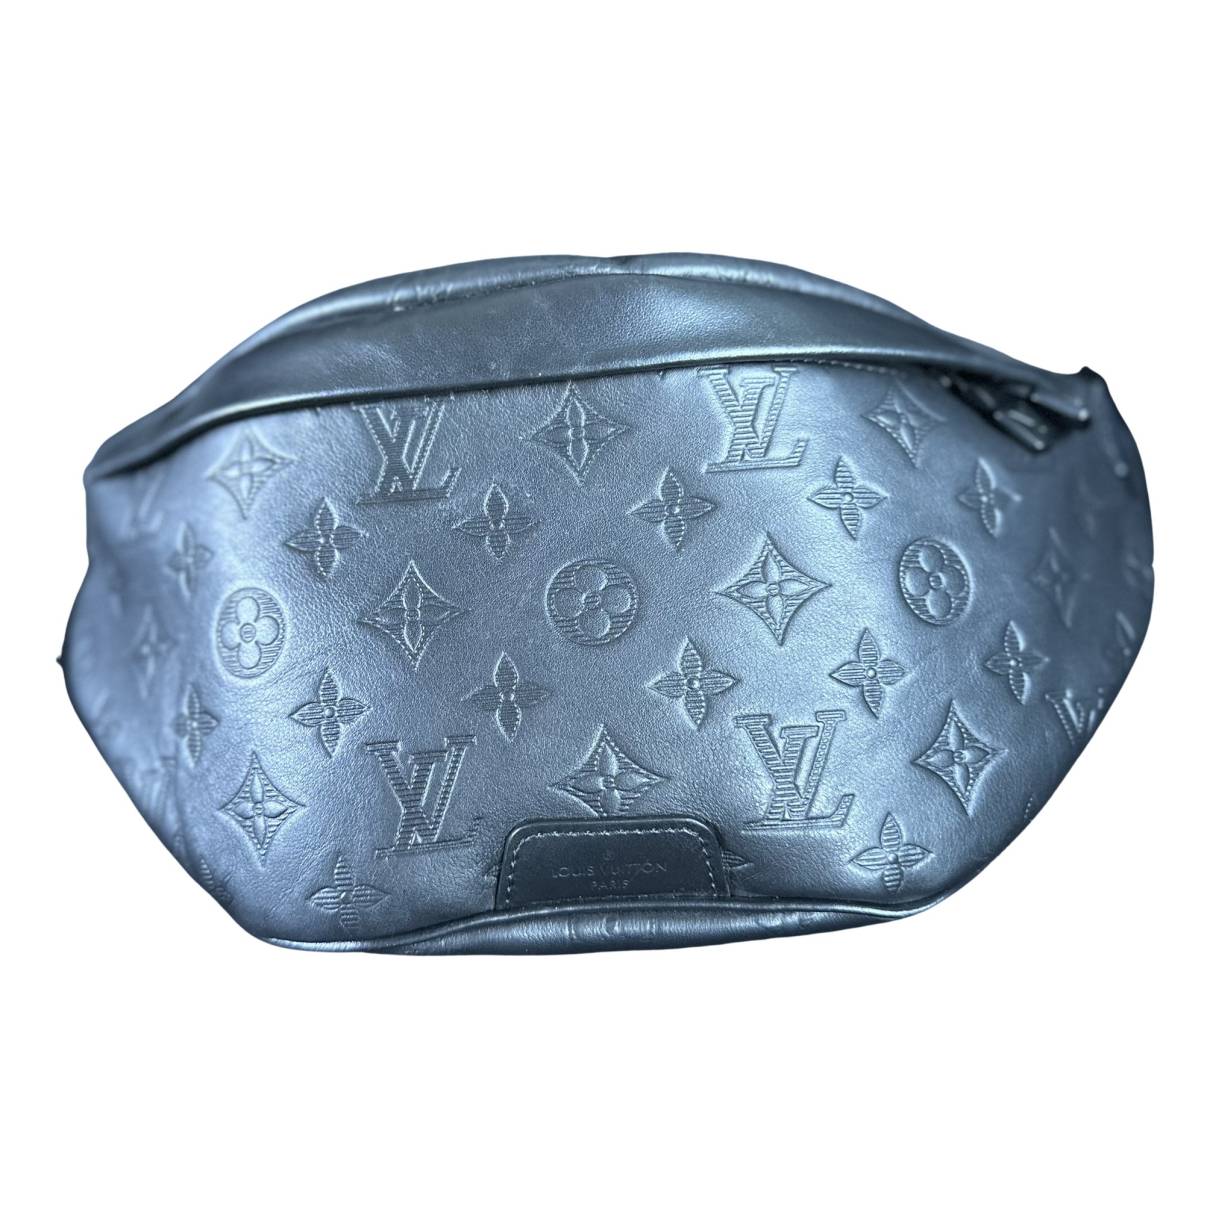 Bum bag / sac ceinture leather weekend bag Louis Vuitton Black in